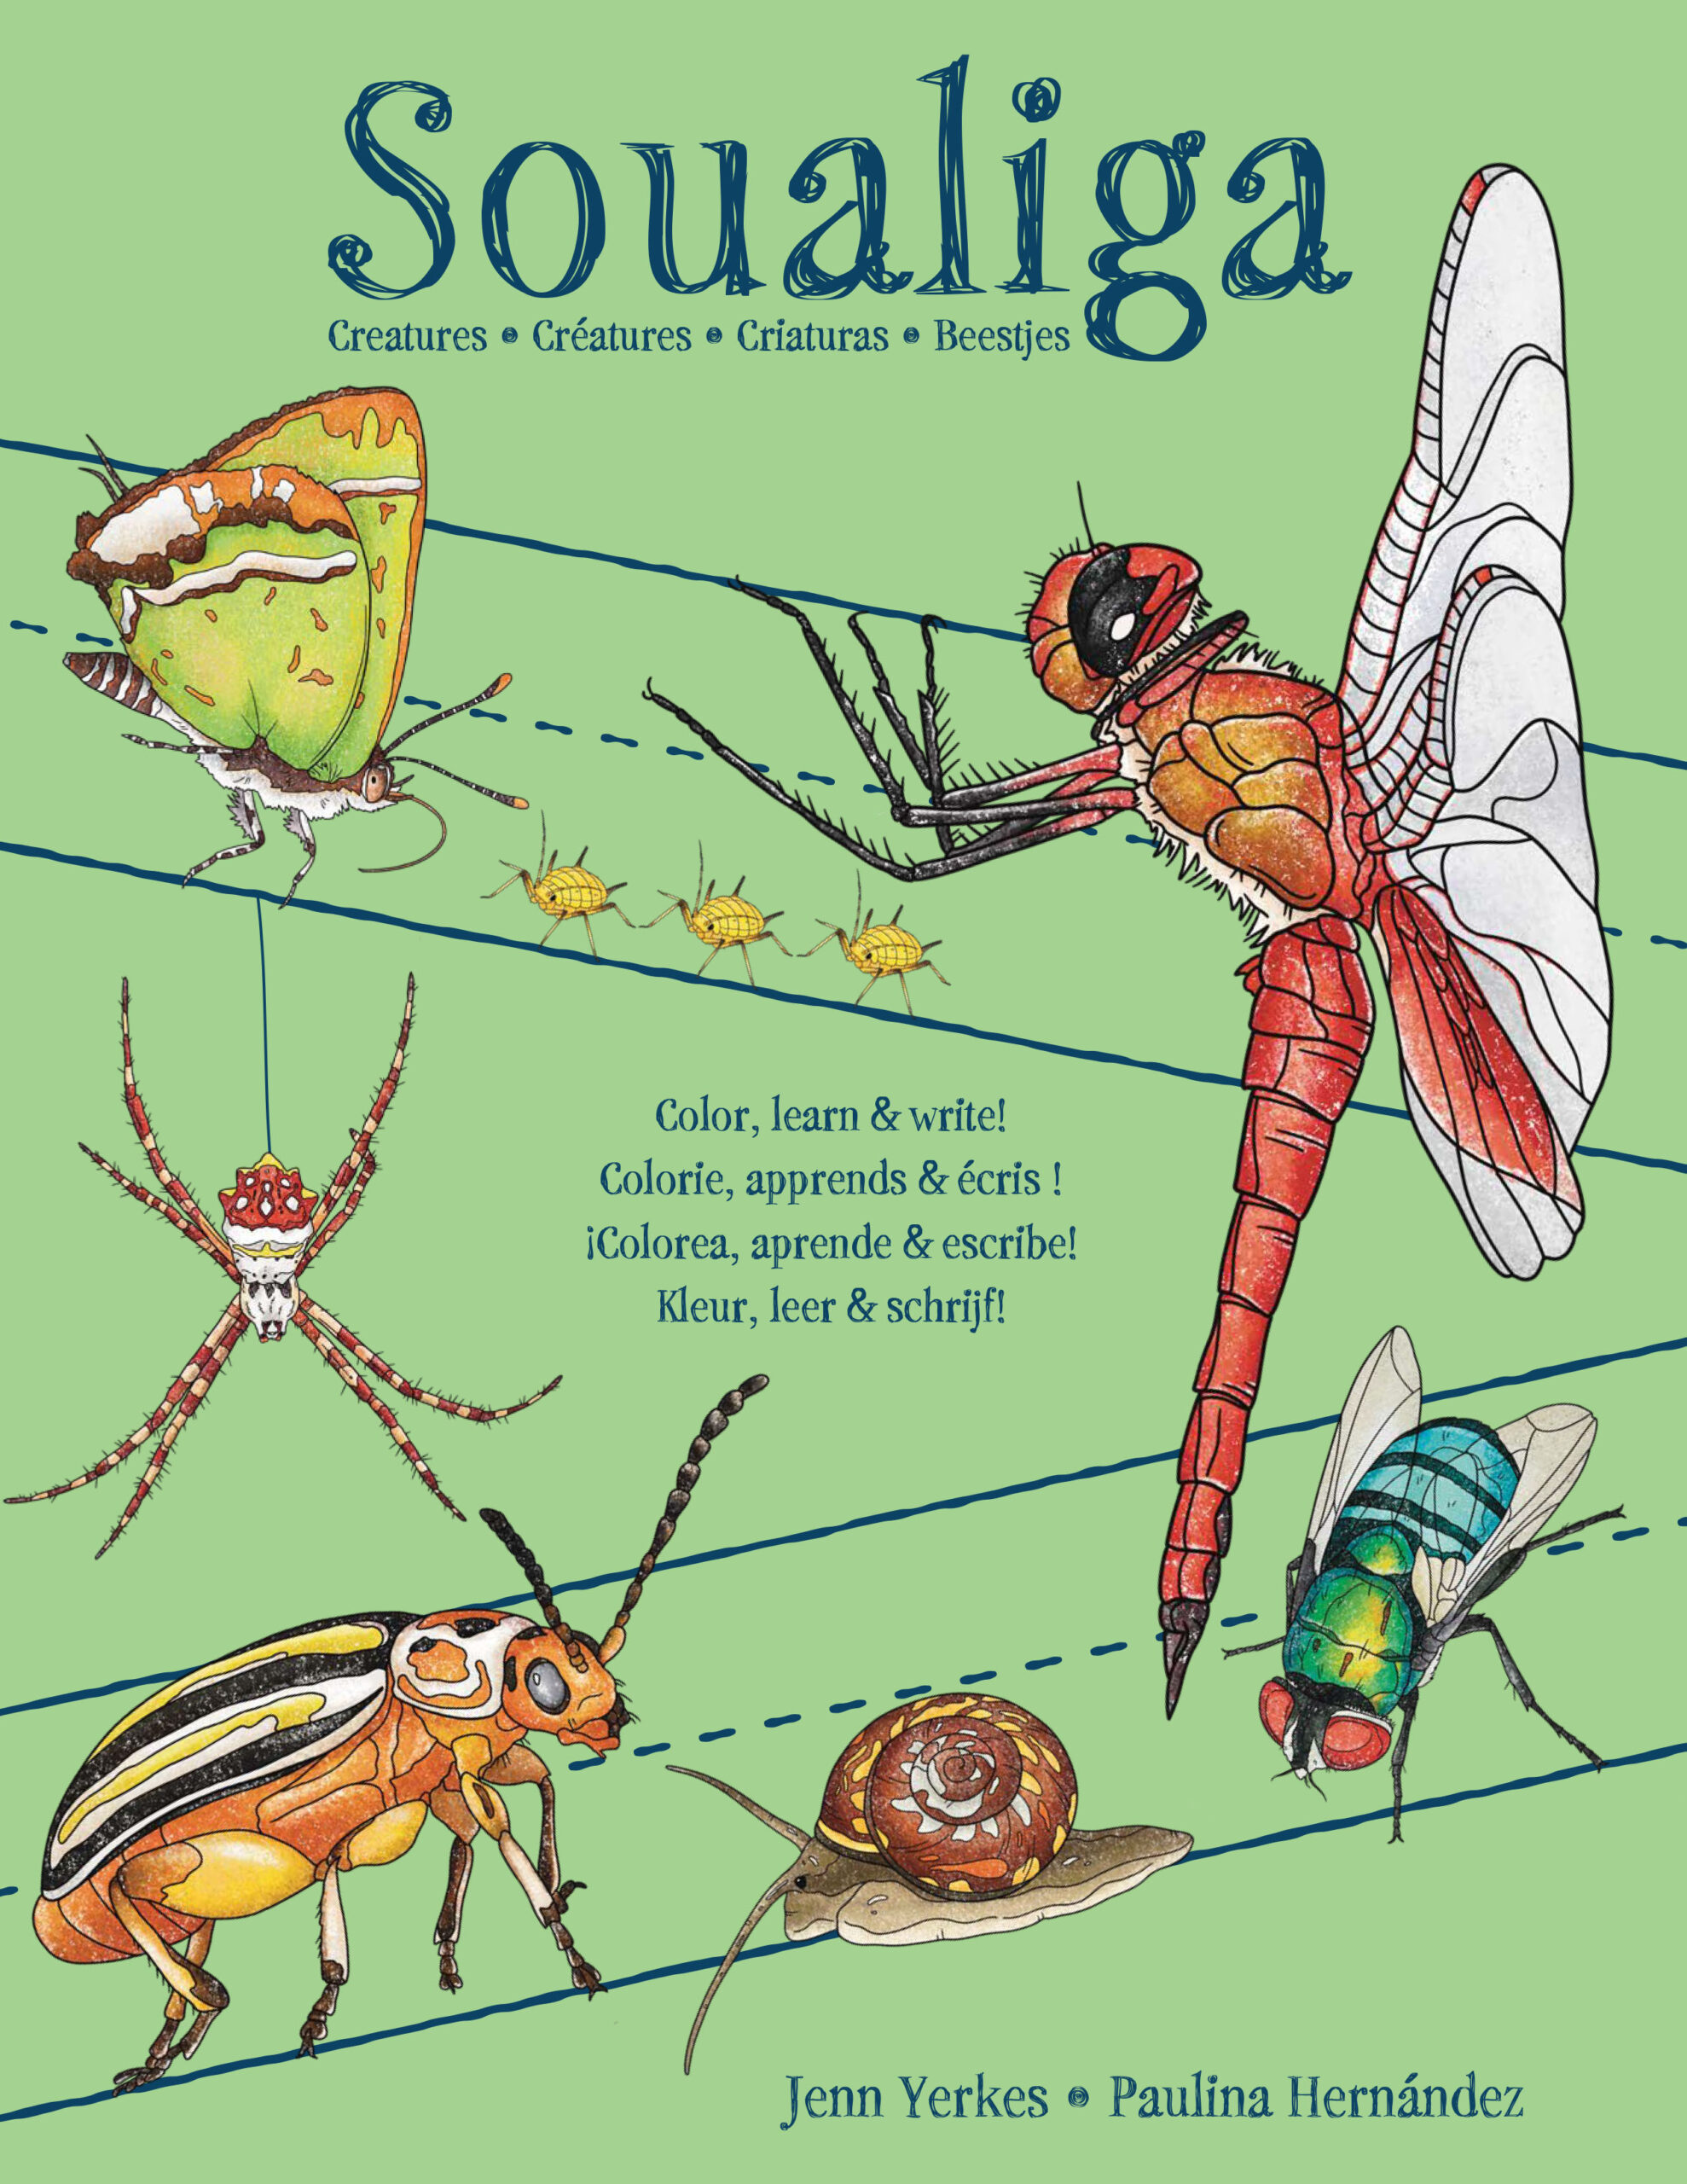 Soualiga Creatures book for kids